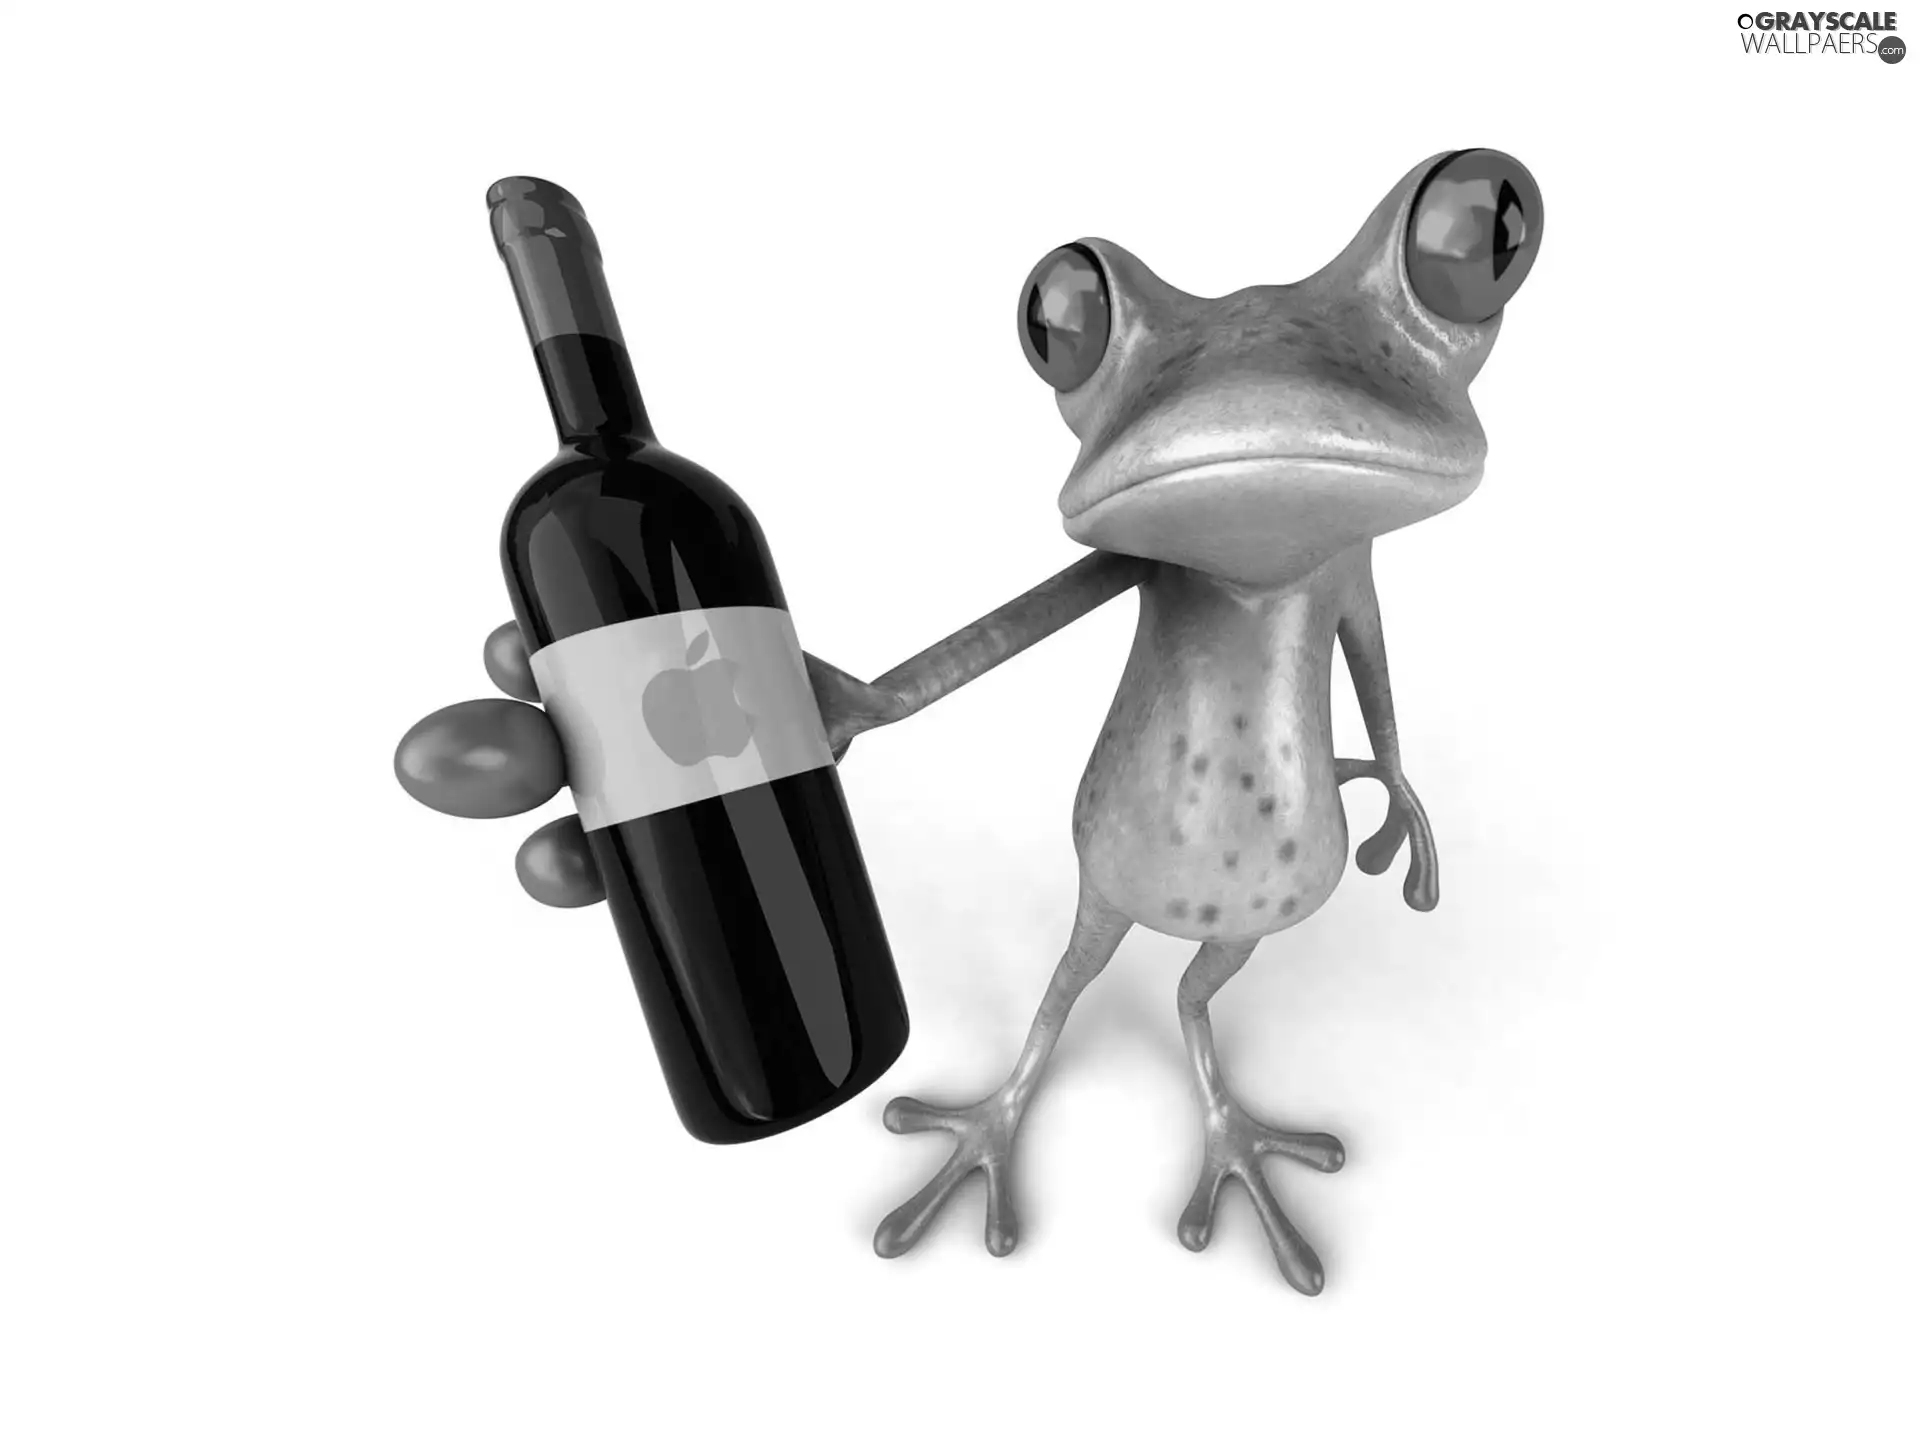 Wine, Apple, strange frog